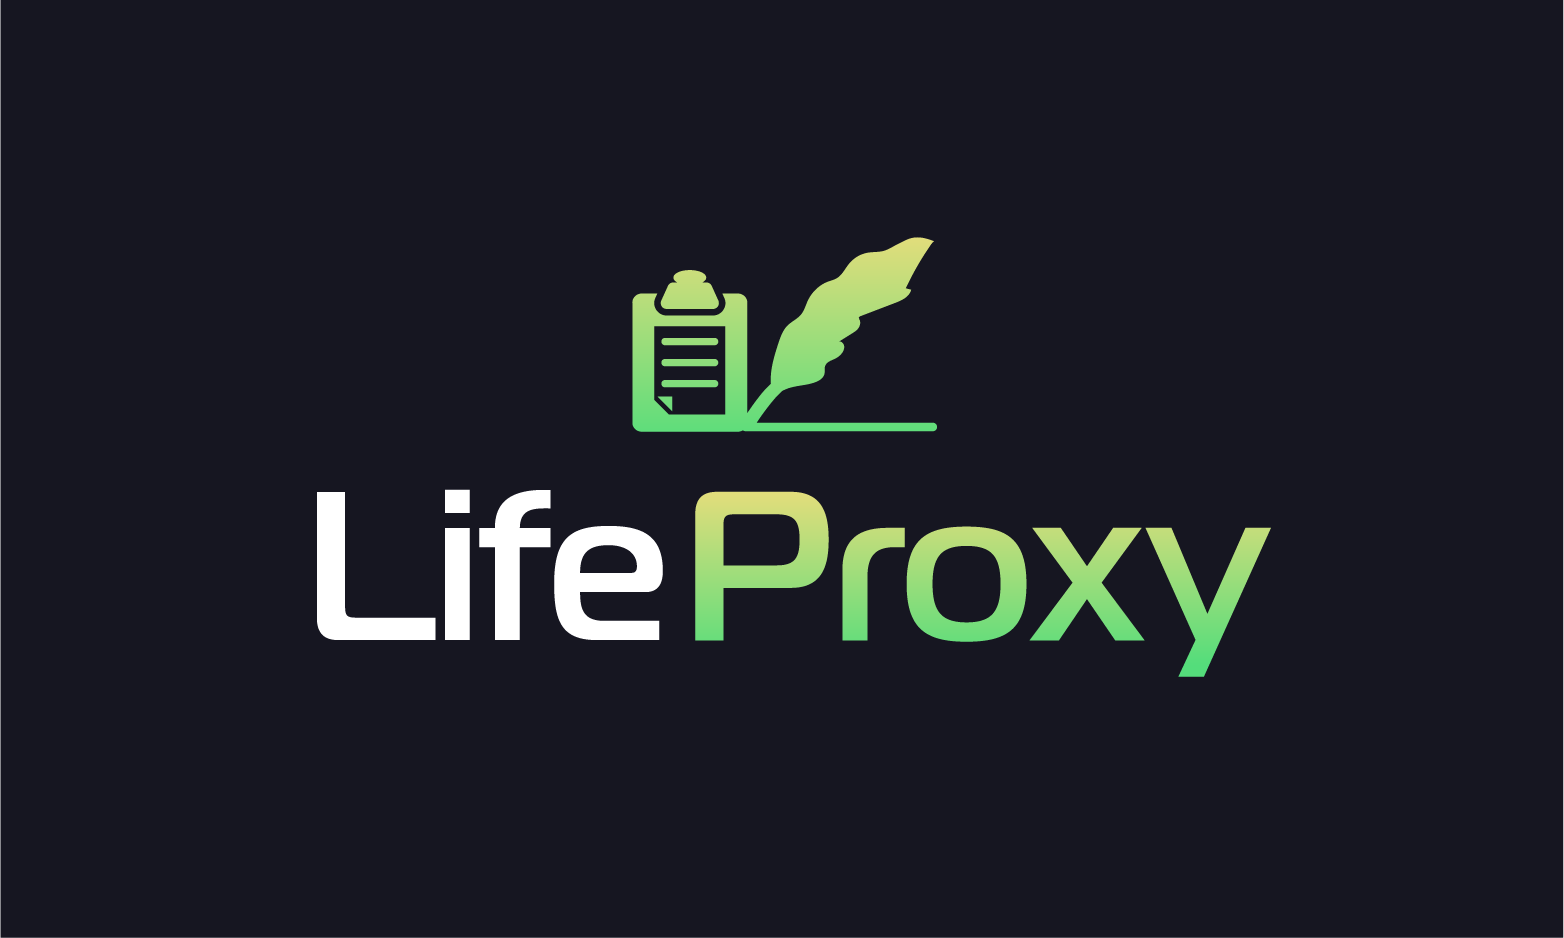 LifeProxy.com - Creative brandable domain for sale